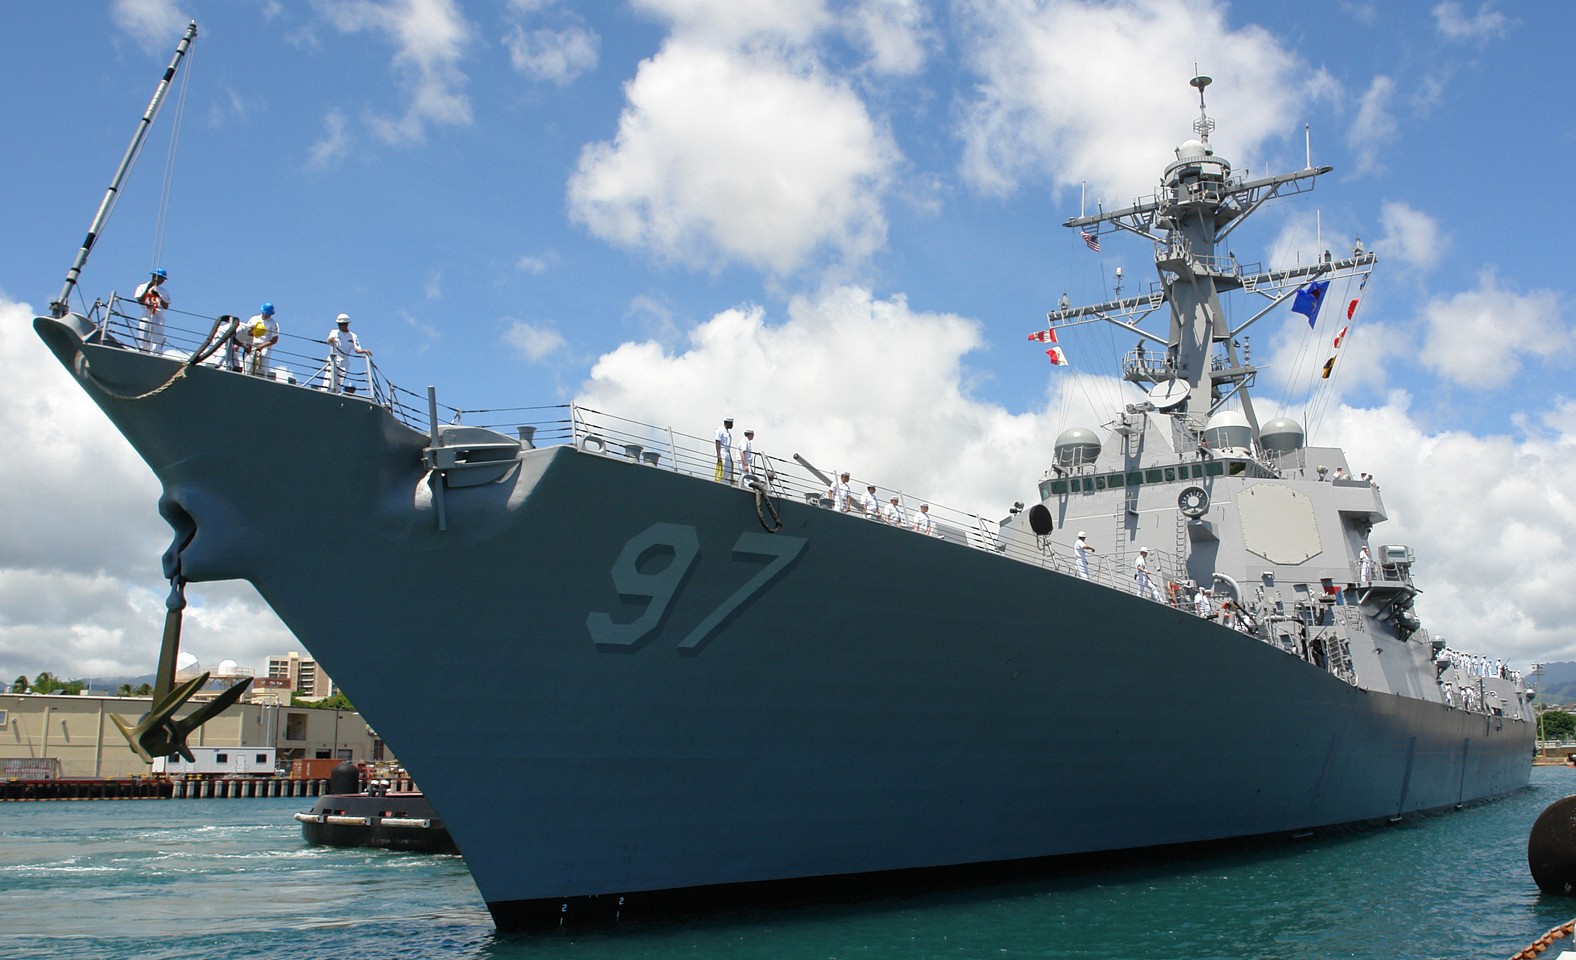 ddg-97 uss halsey arleigh burke class guided missile destroyer aegis naval station pearl harbor hawaii 05